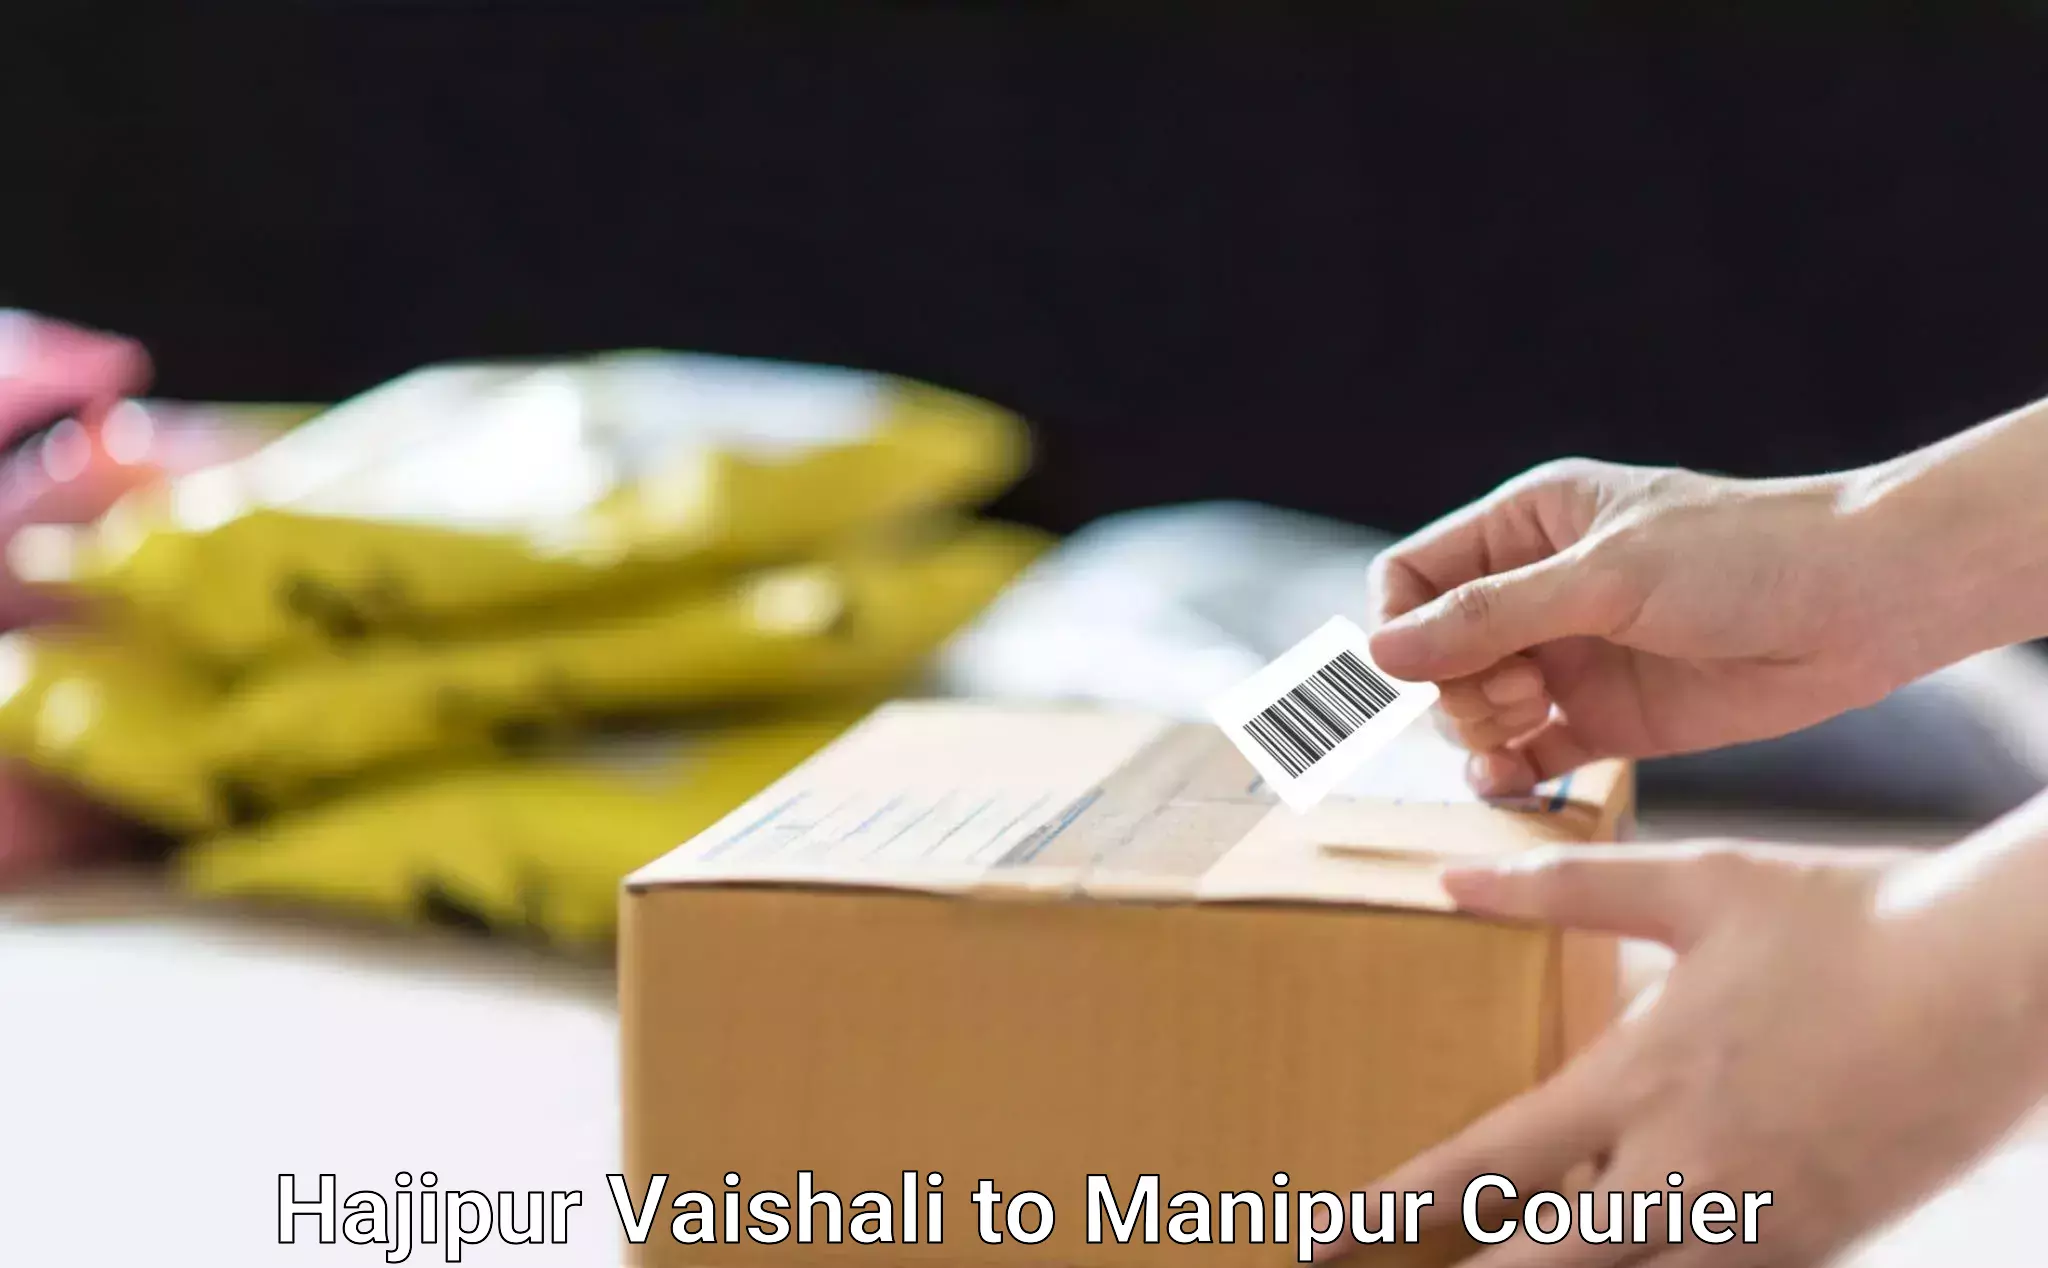 Expert moving and storage Hajipur Vaishali to Chandel